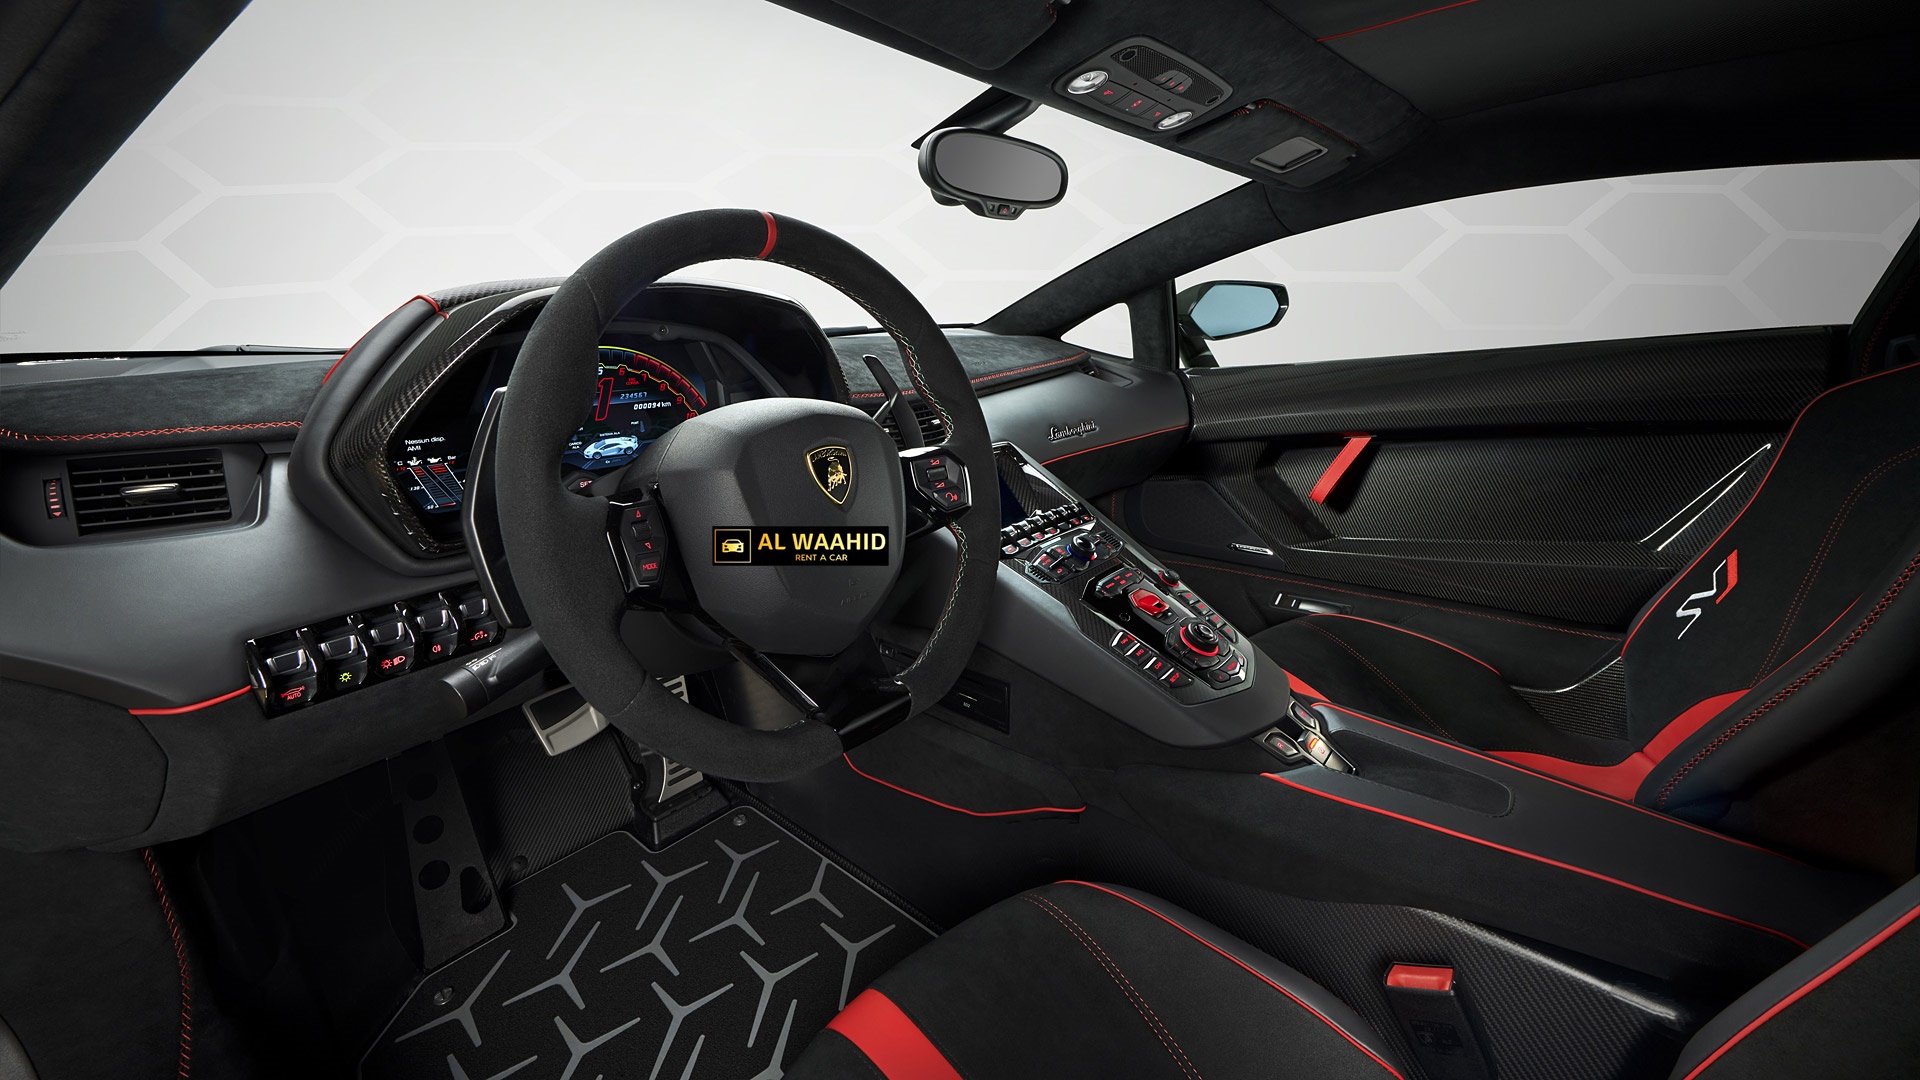 2019 Lamborghini Aventador SVJ rental dubai luxury cars alwaheed rental